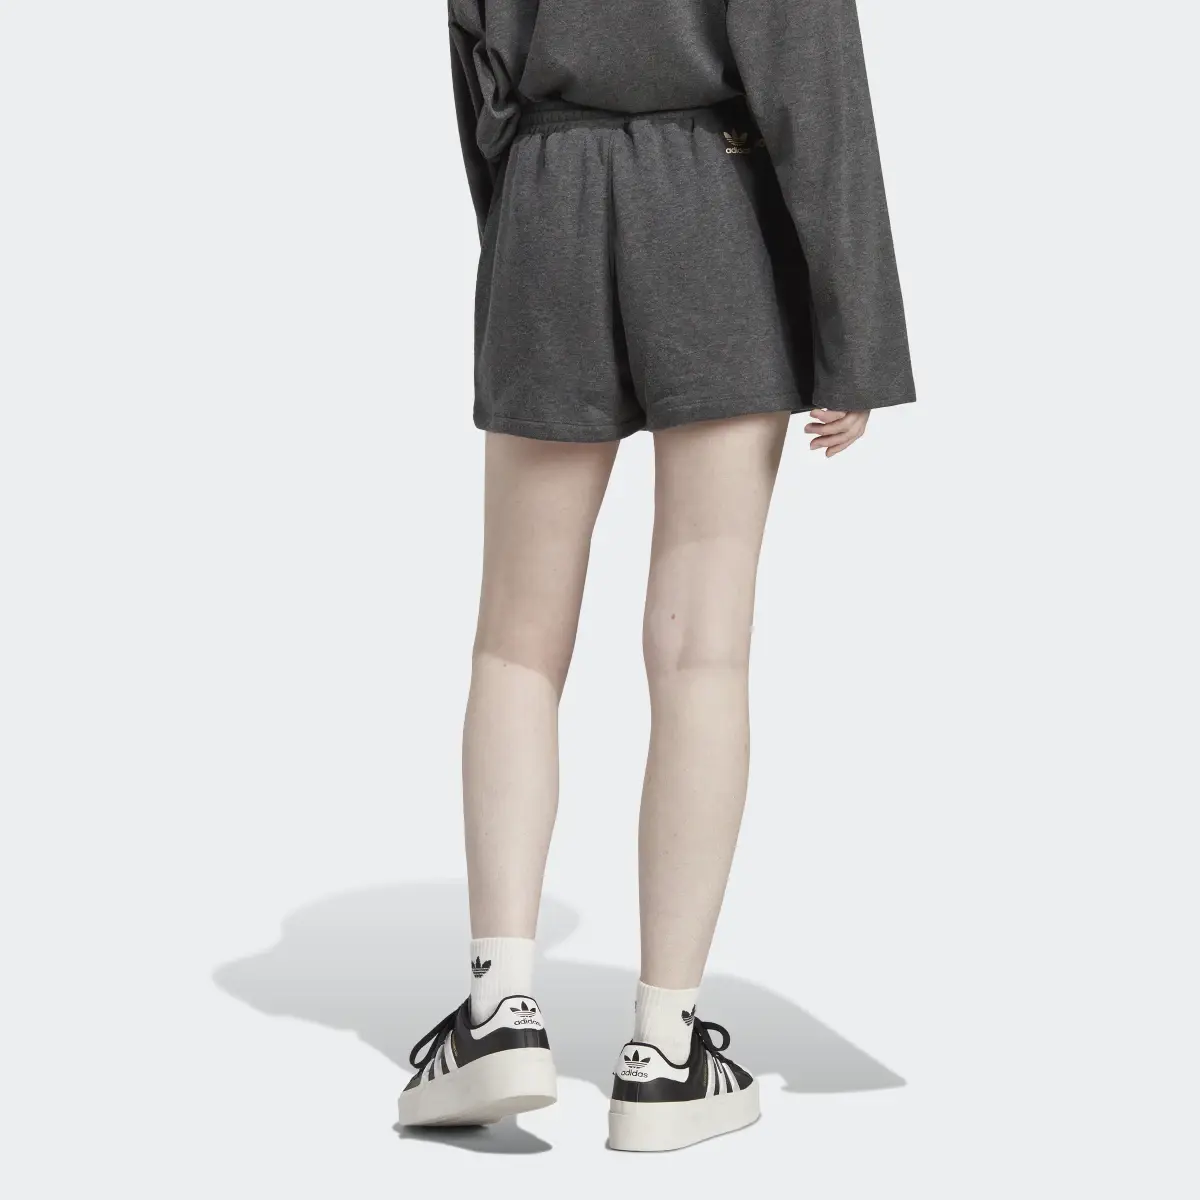 Adidas Originals x Moomin Sweat Shorts. 2